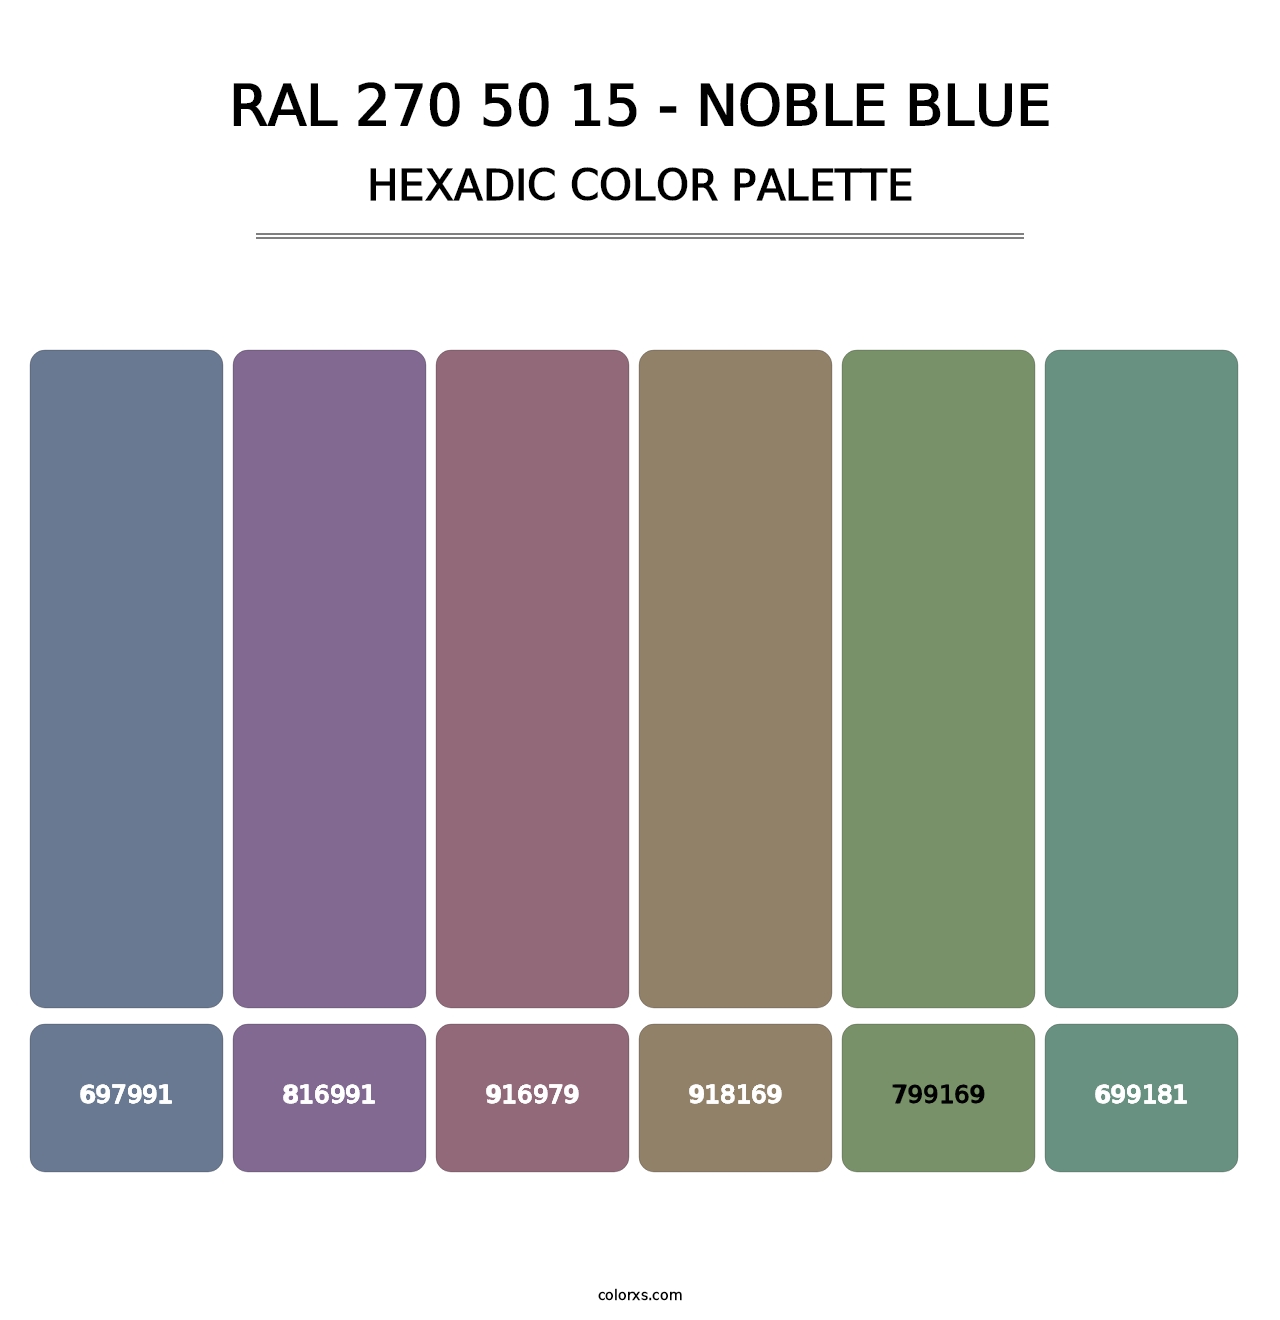 RAL 270 50 15 - Noble Blue - Hexadic Color Palette